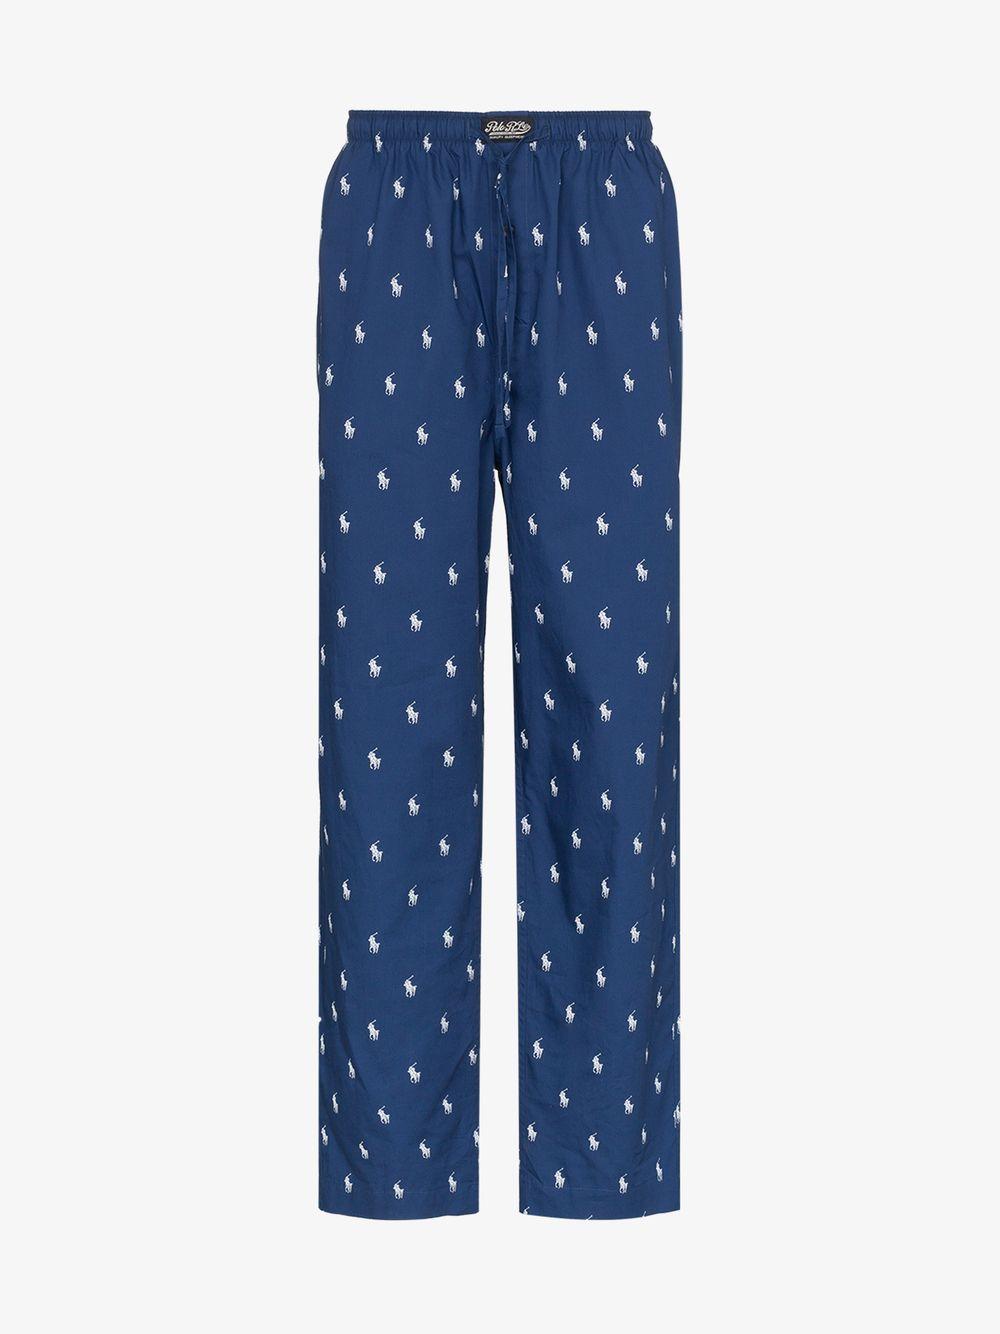 Polo Ralph Lauren Cotton Logo Print Pyjama Trousers in Blue for Men | Lyst